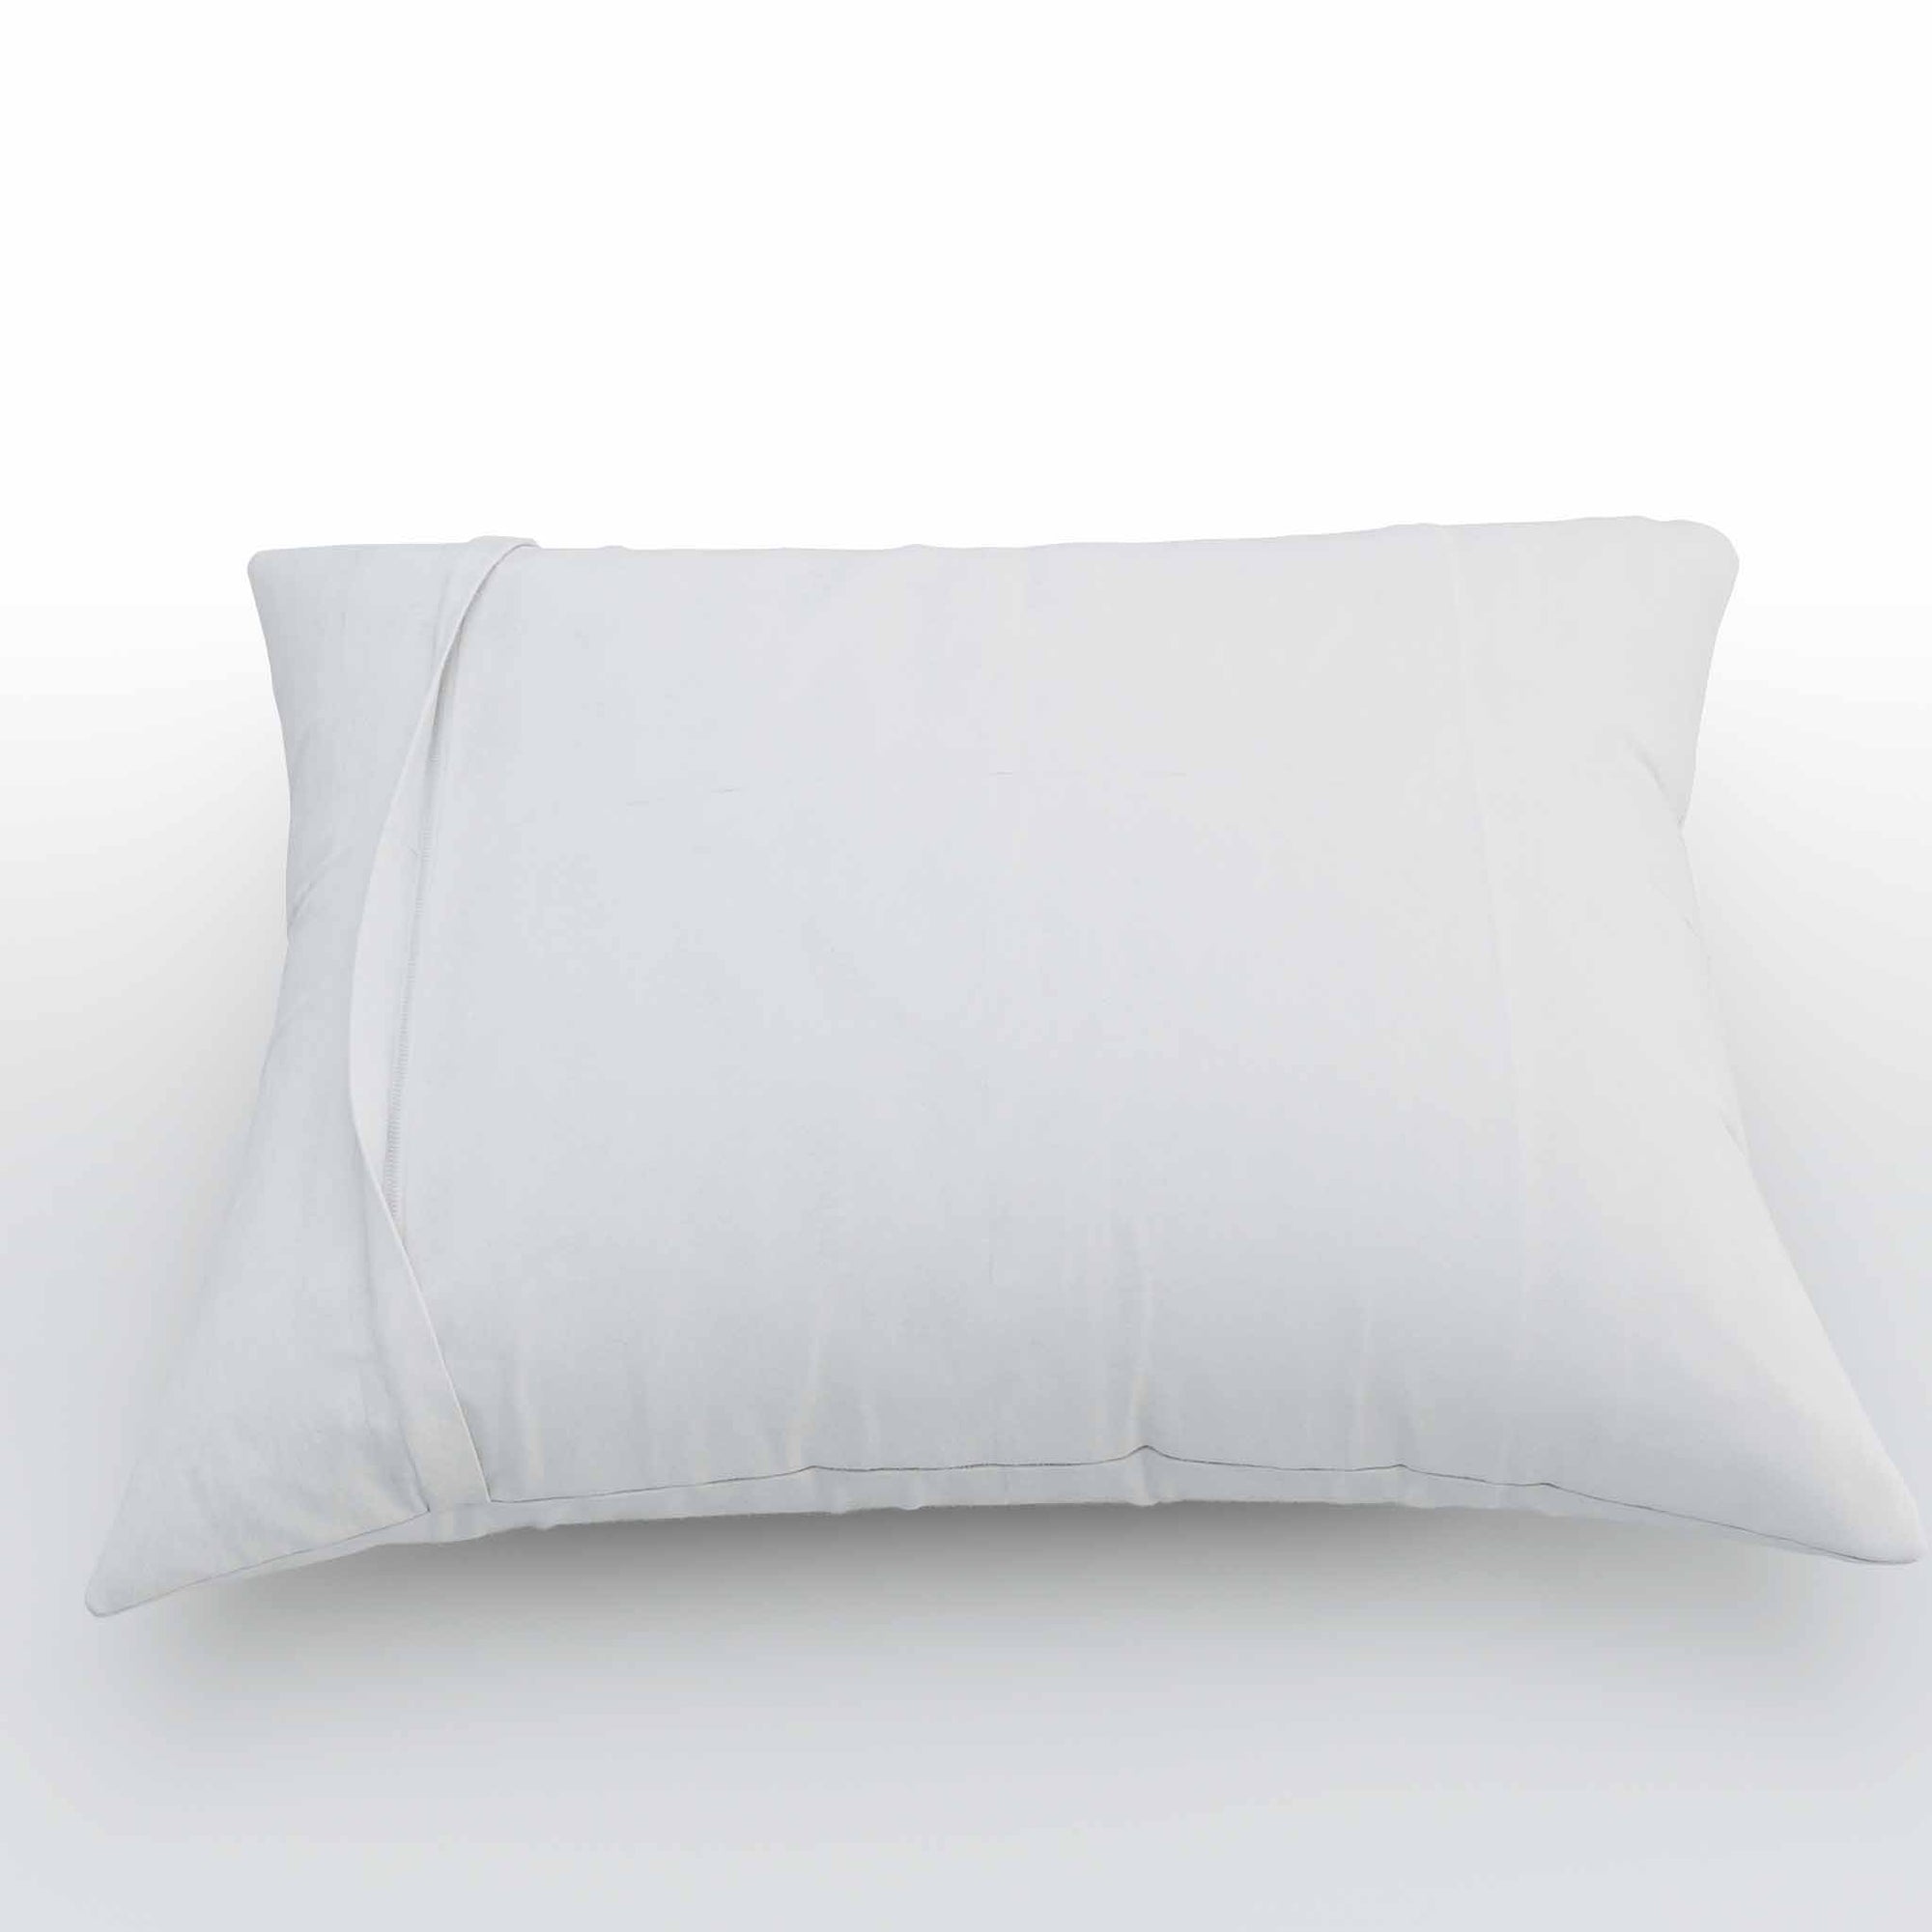 Dust Mite Proof Cotton Pillow Covers  AllergyCare 100% Cotton 